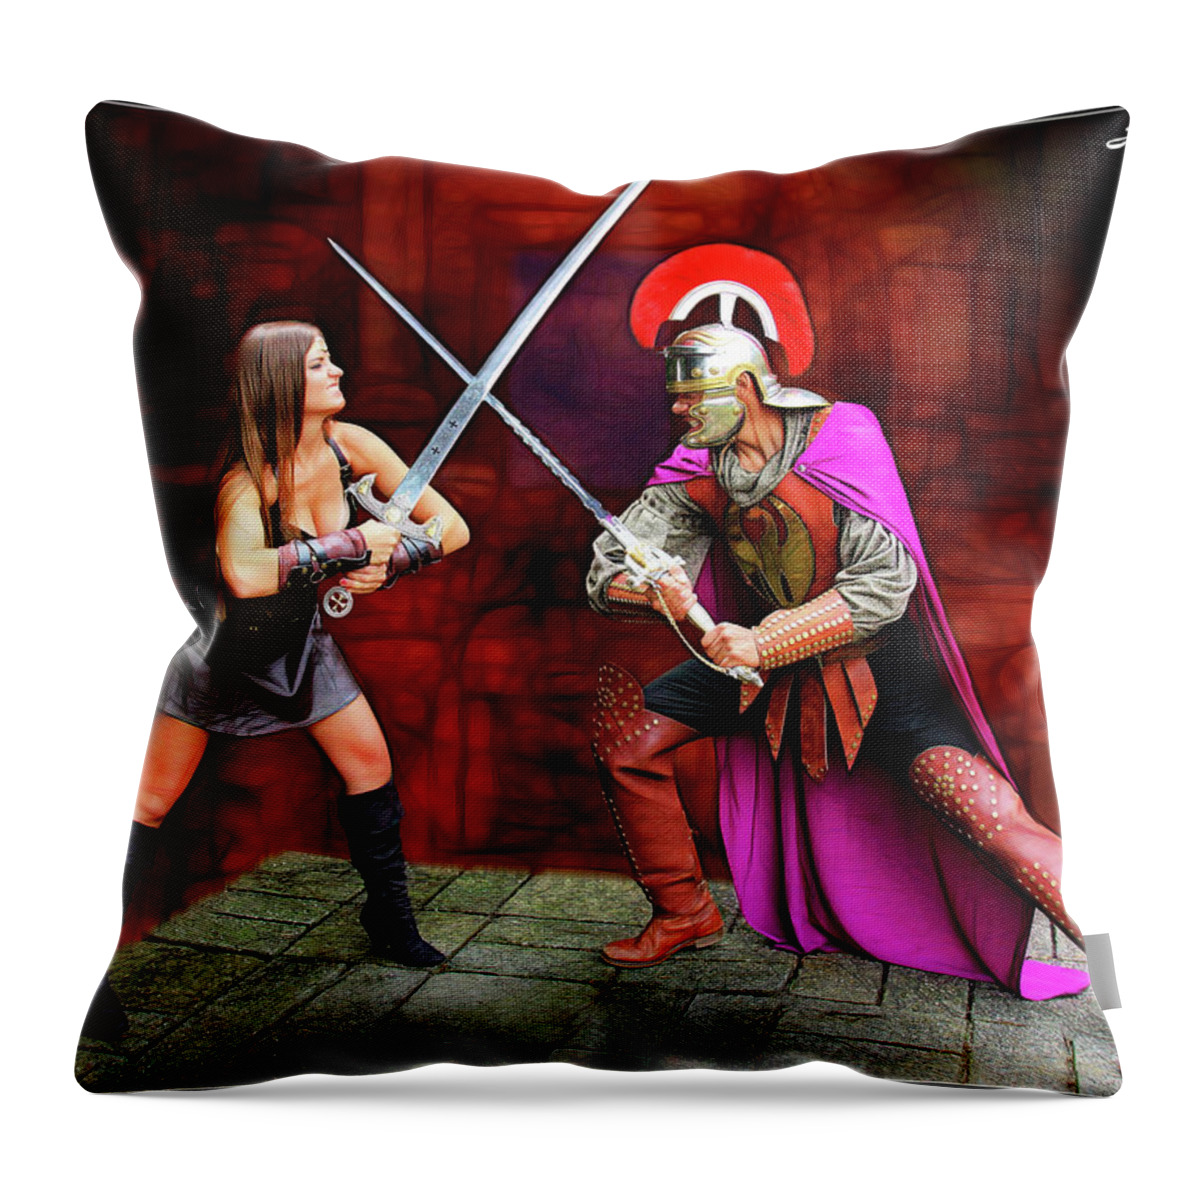 Xena Throw Pillow featuring the photograph Sword Fight Xena vs Roman by Jon Volden